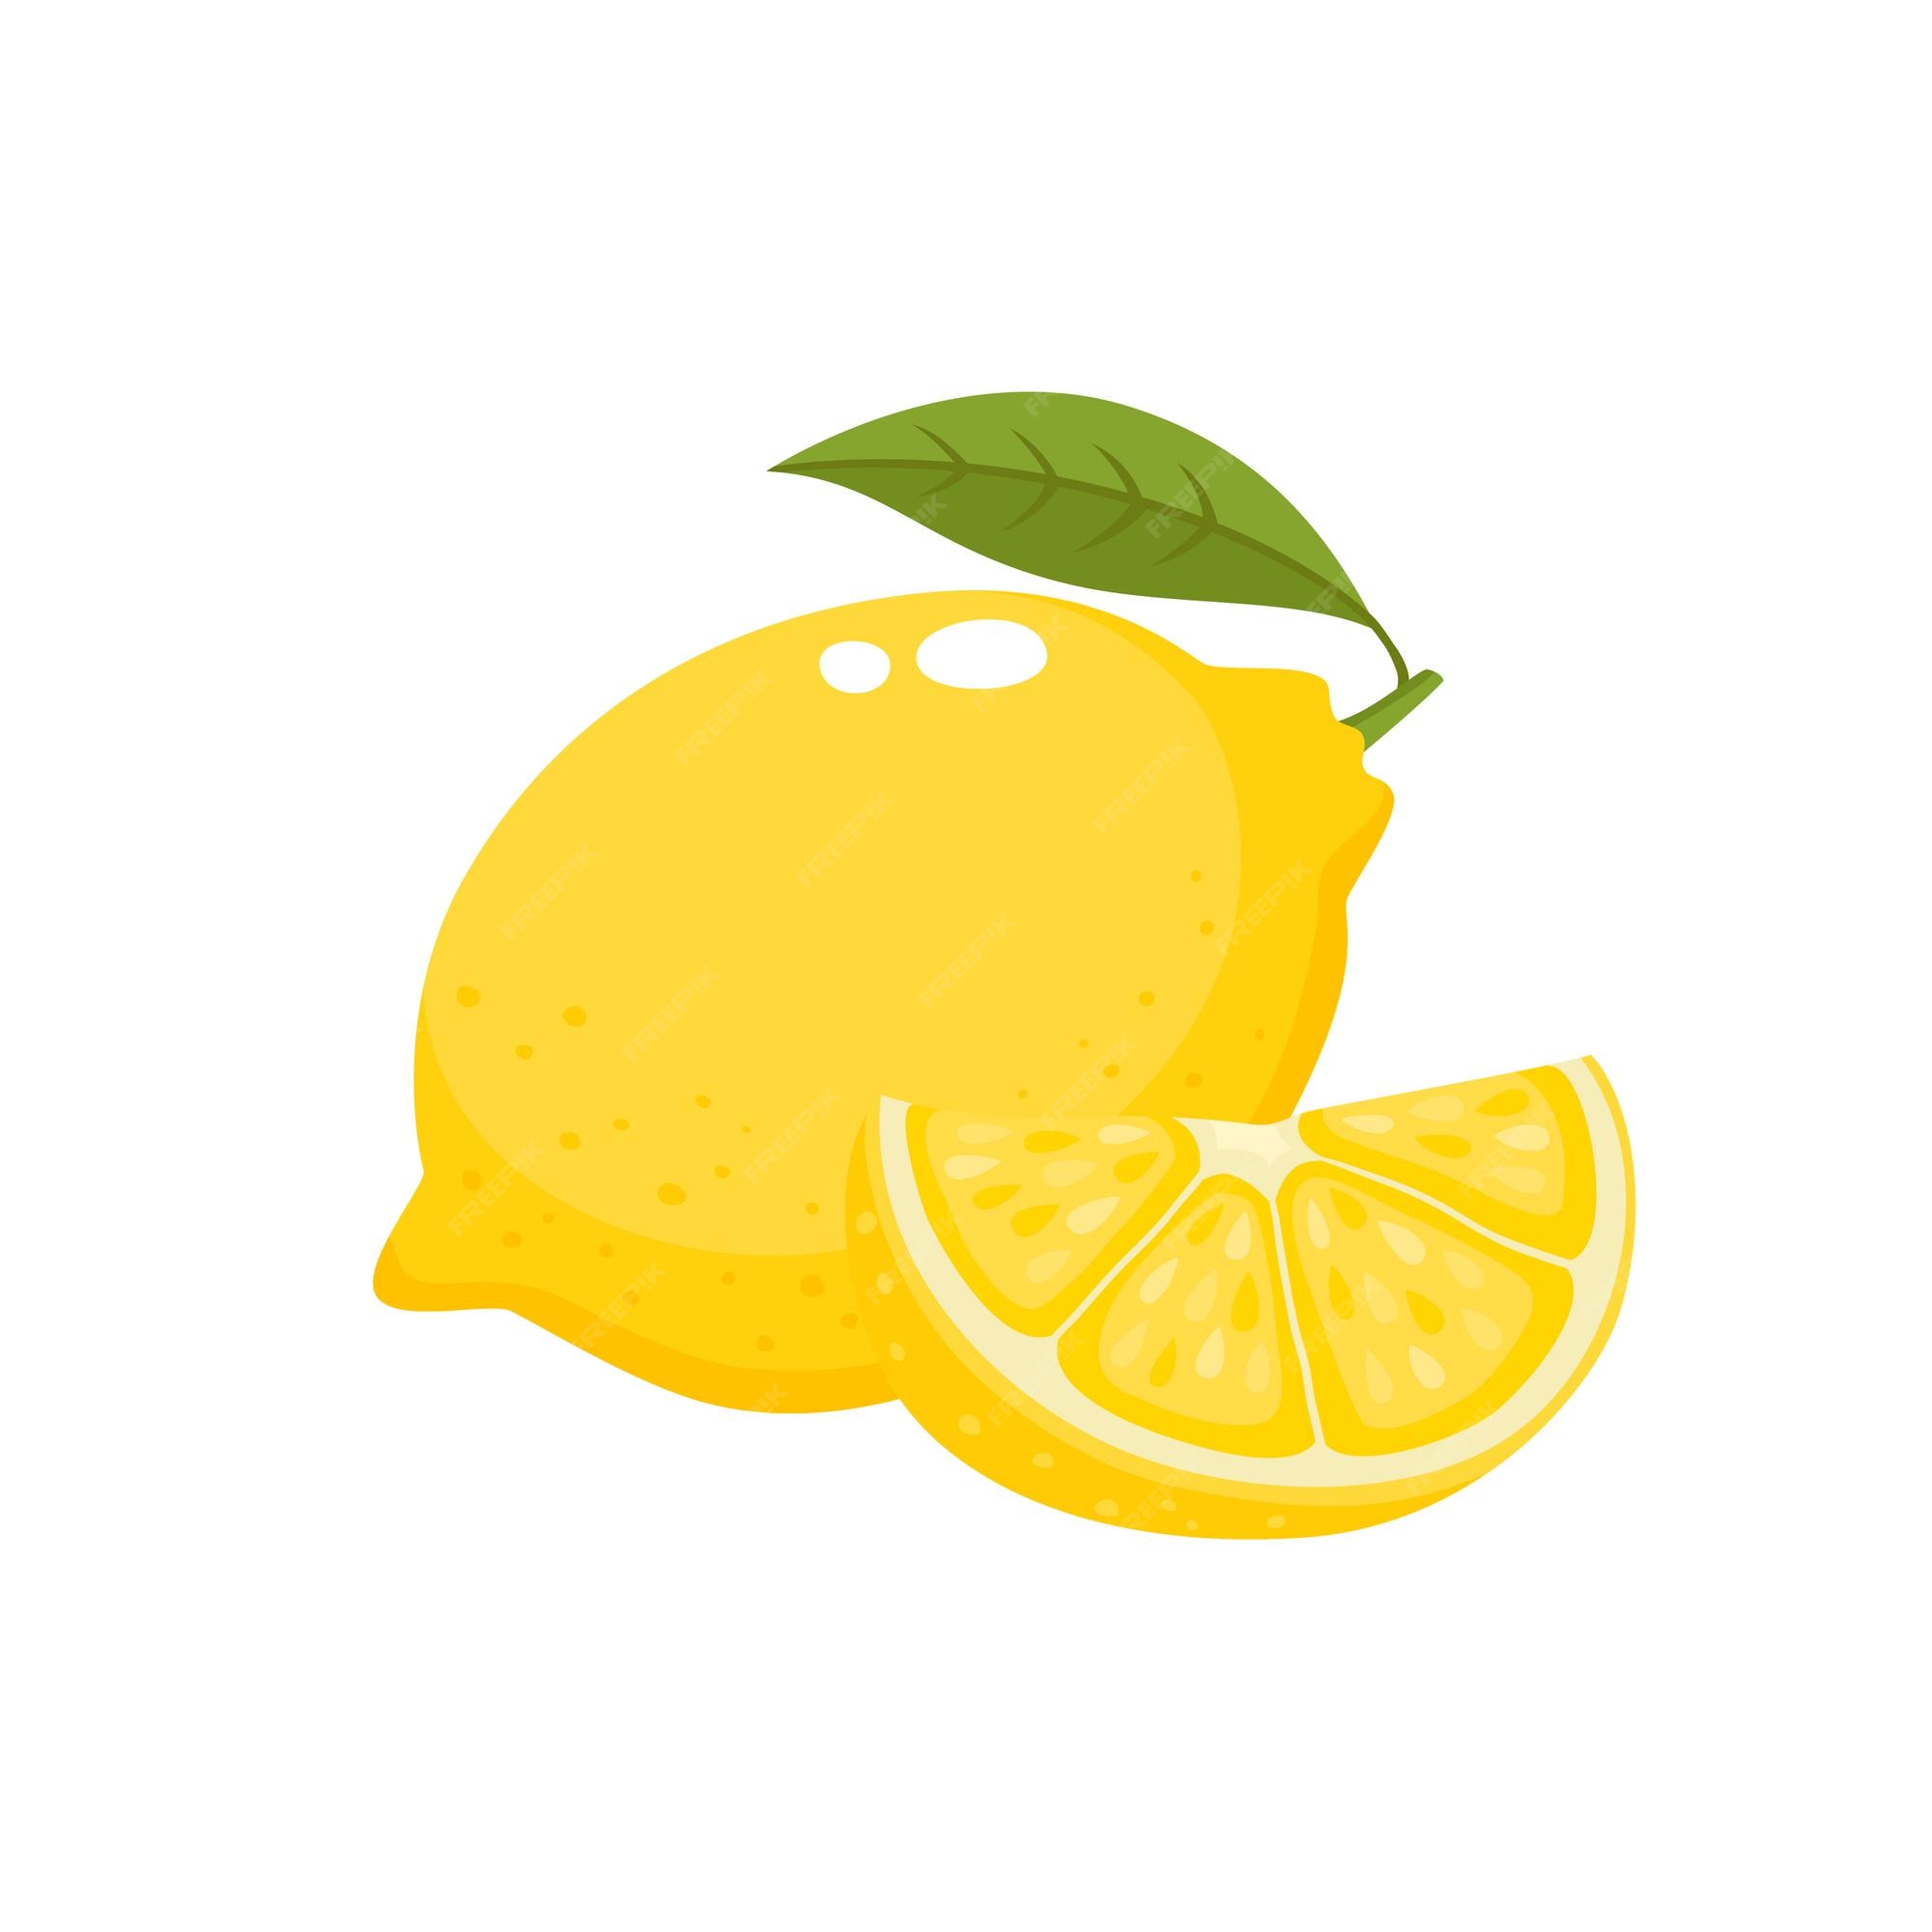 Premium Vector | Juicy lemon cartoon illustration isolated